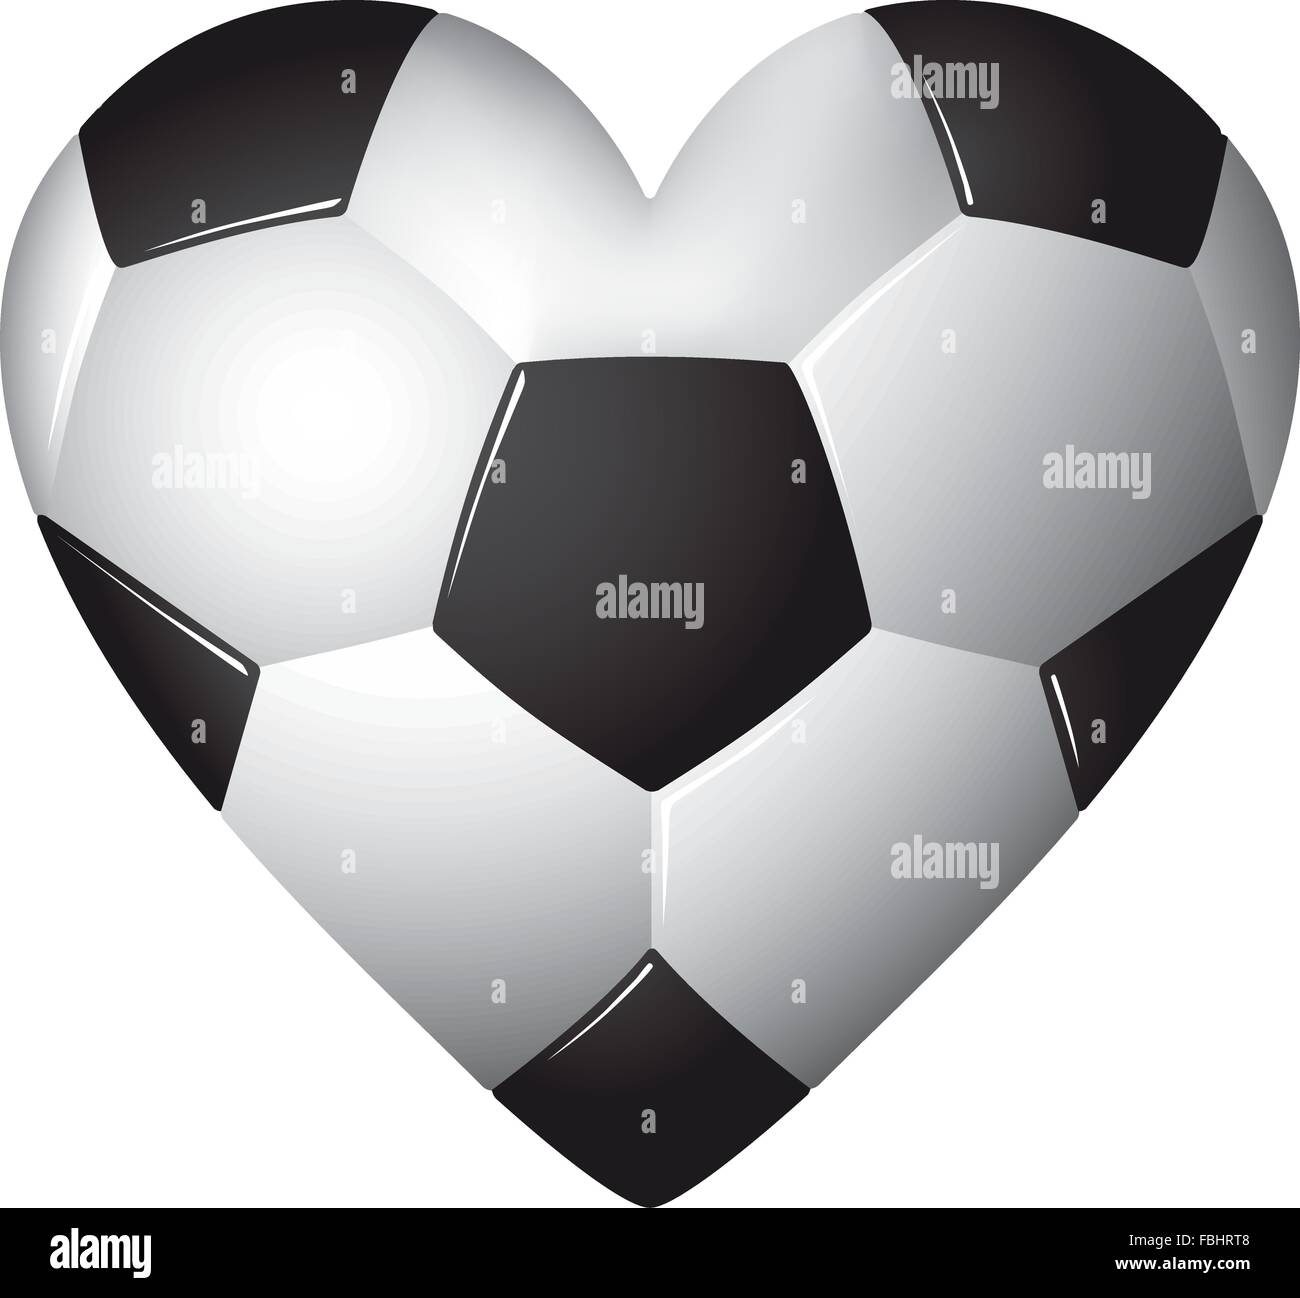 En forme de coeur - football - soccer ball illustration. Illustration de Vecteur